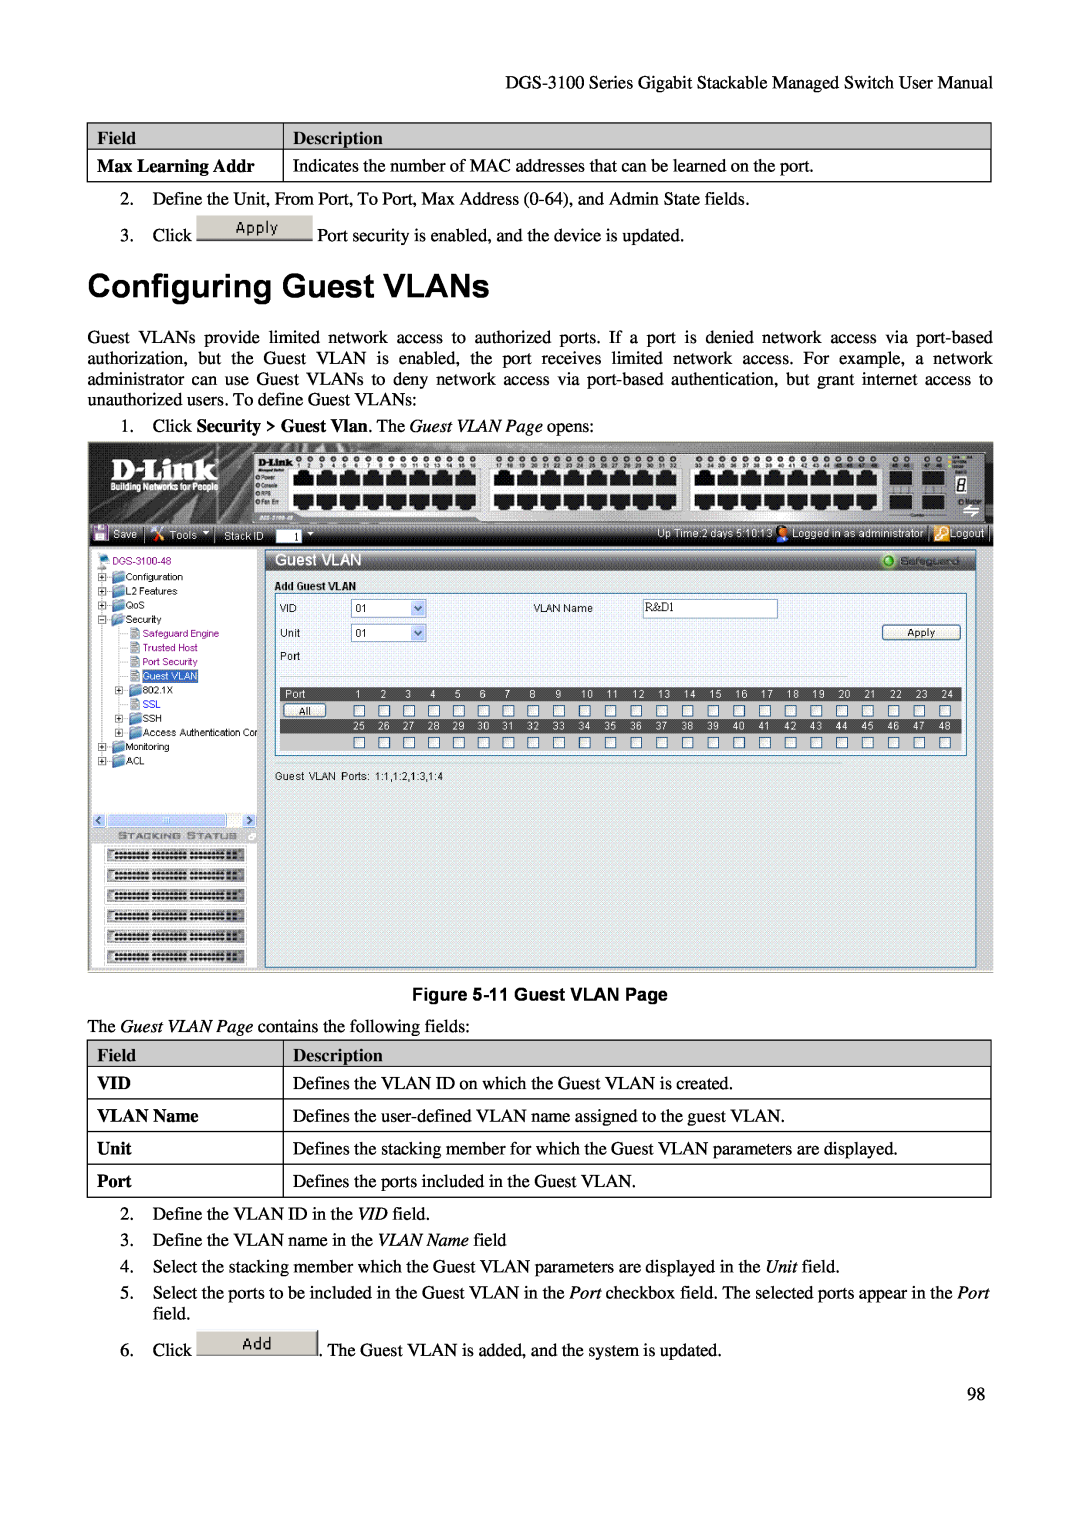 D-Link DGS-3100 user manual Configuring Guest VLANs, Field Max Learning Addr, Description, 11 Guest VLAN Page 